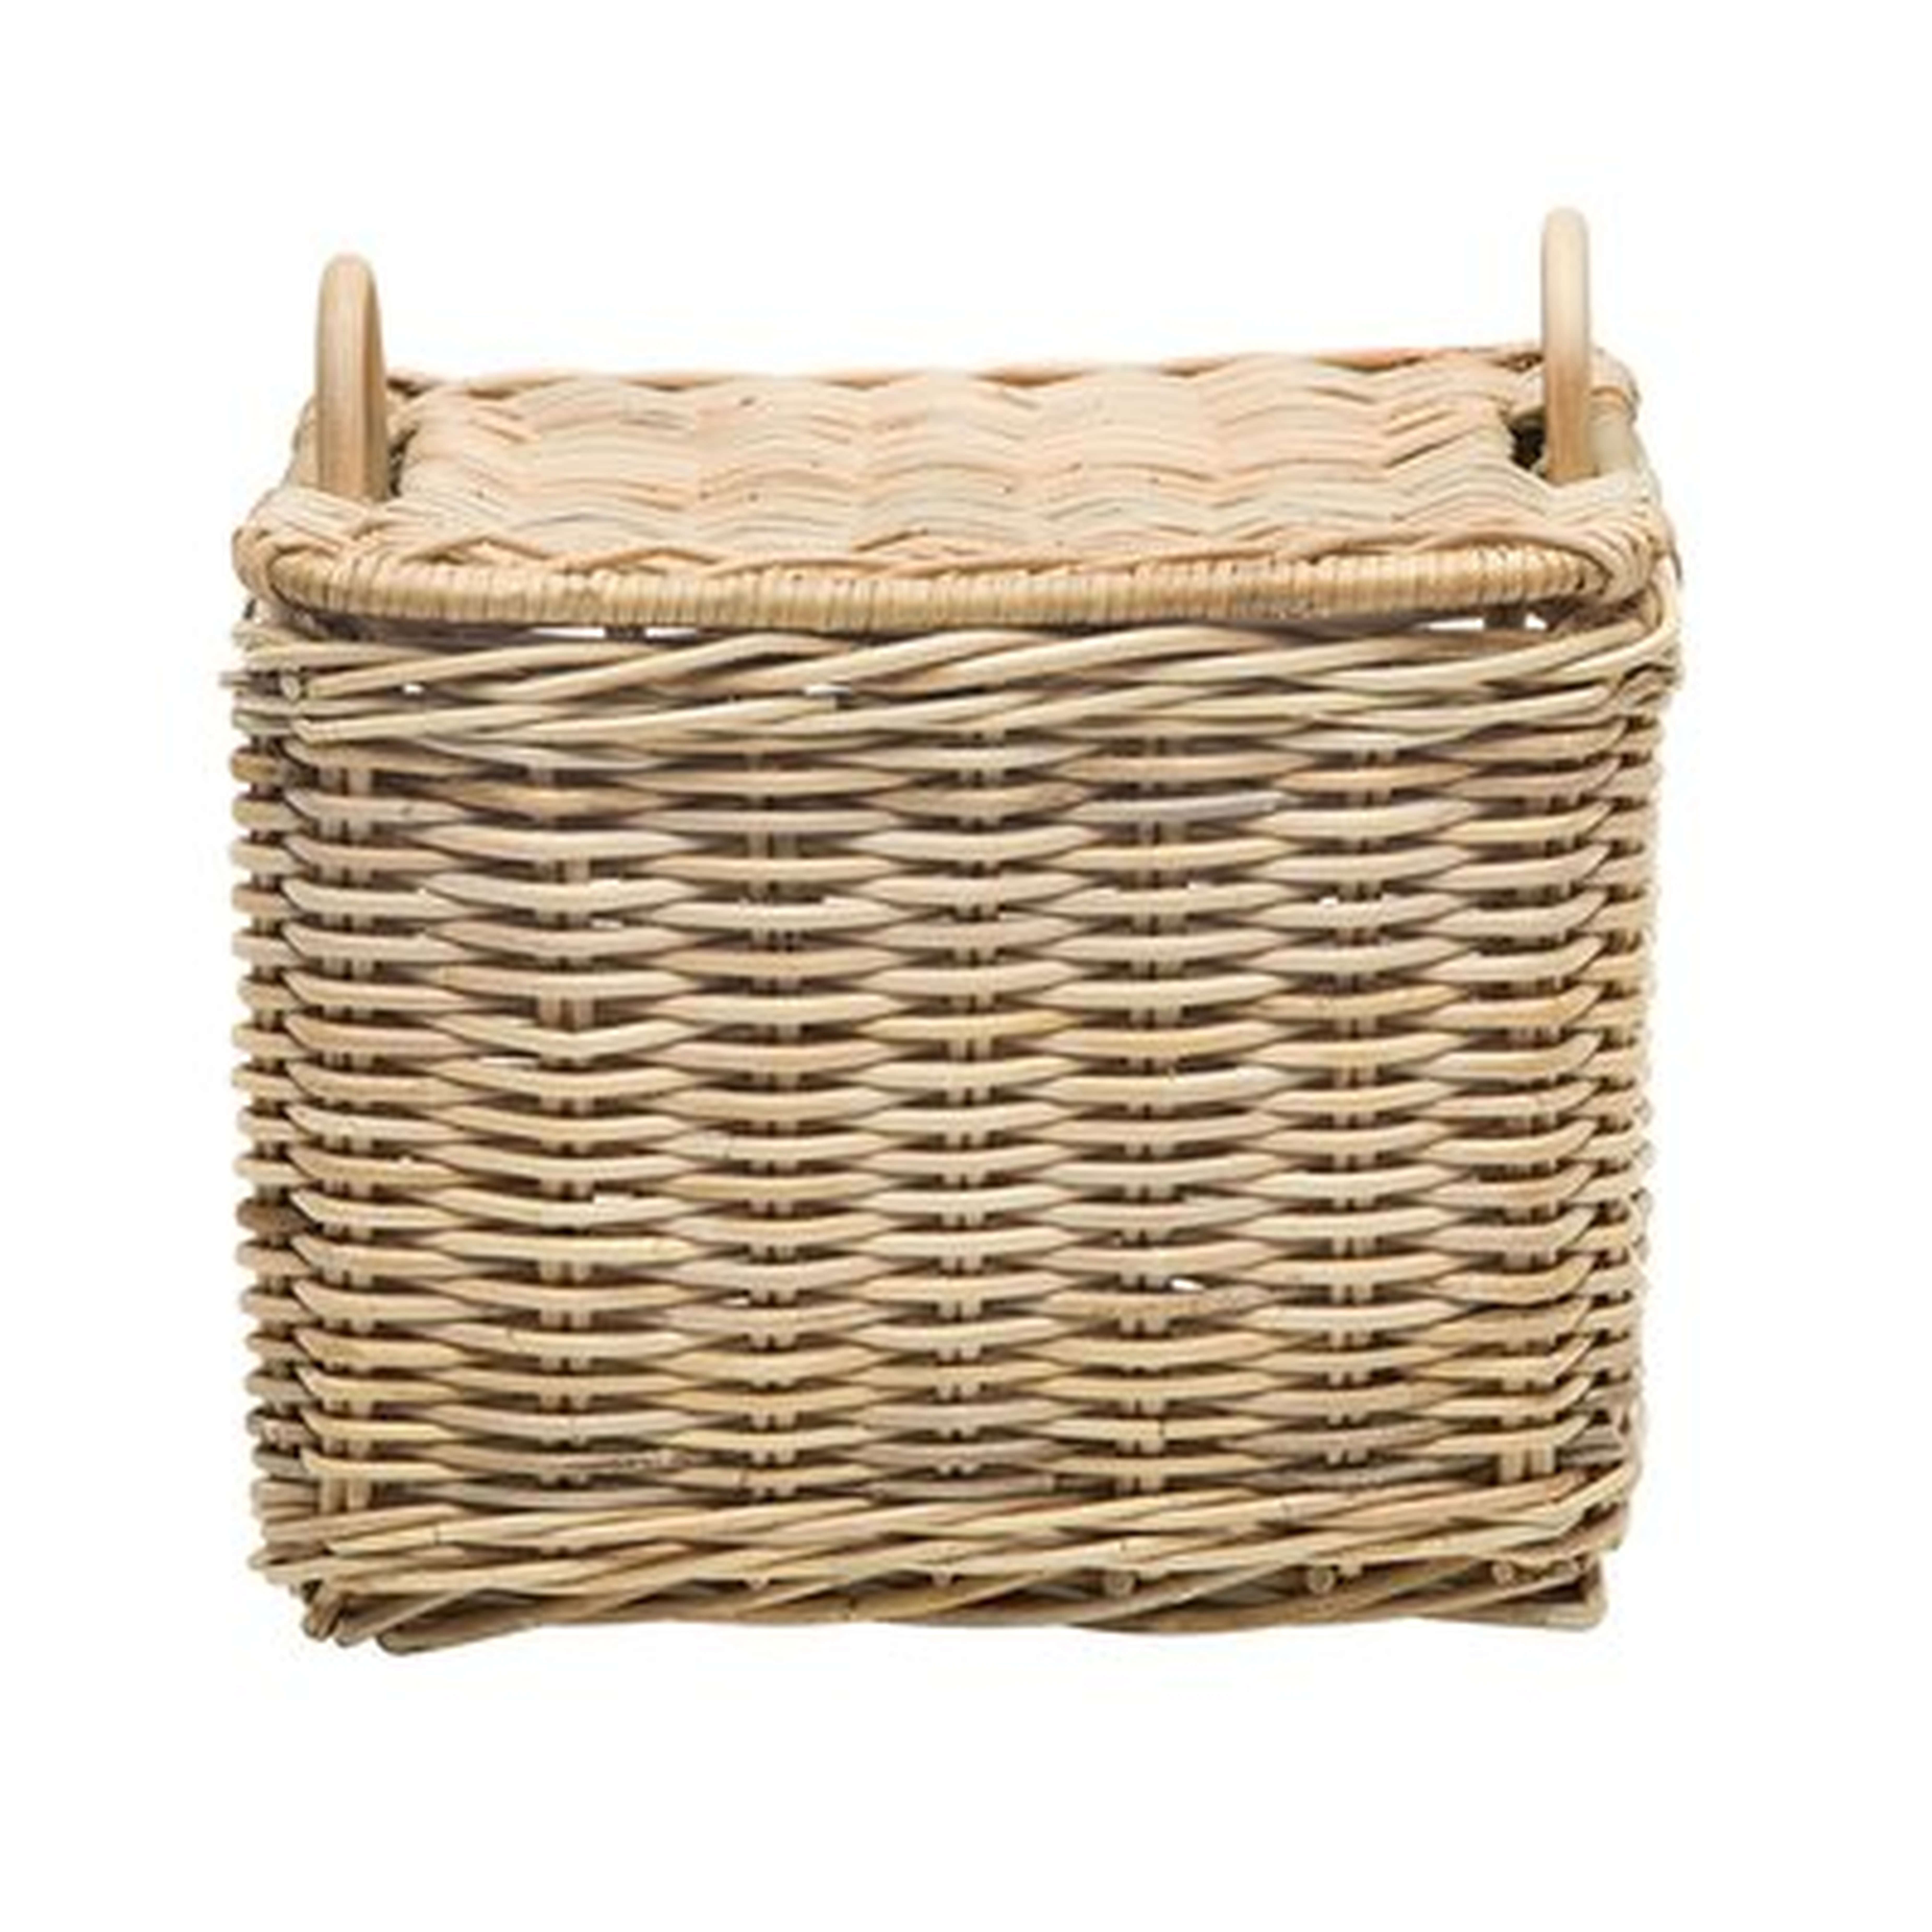 Rectangular Rattan Storage Basket - Wayfair